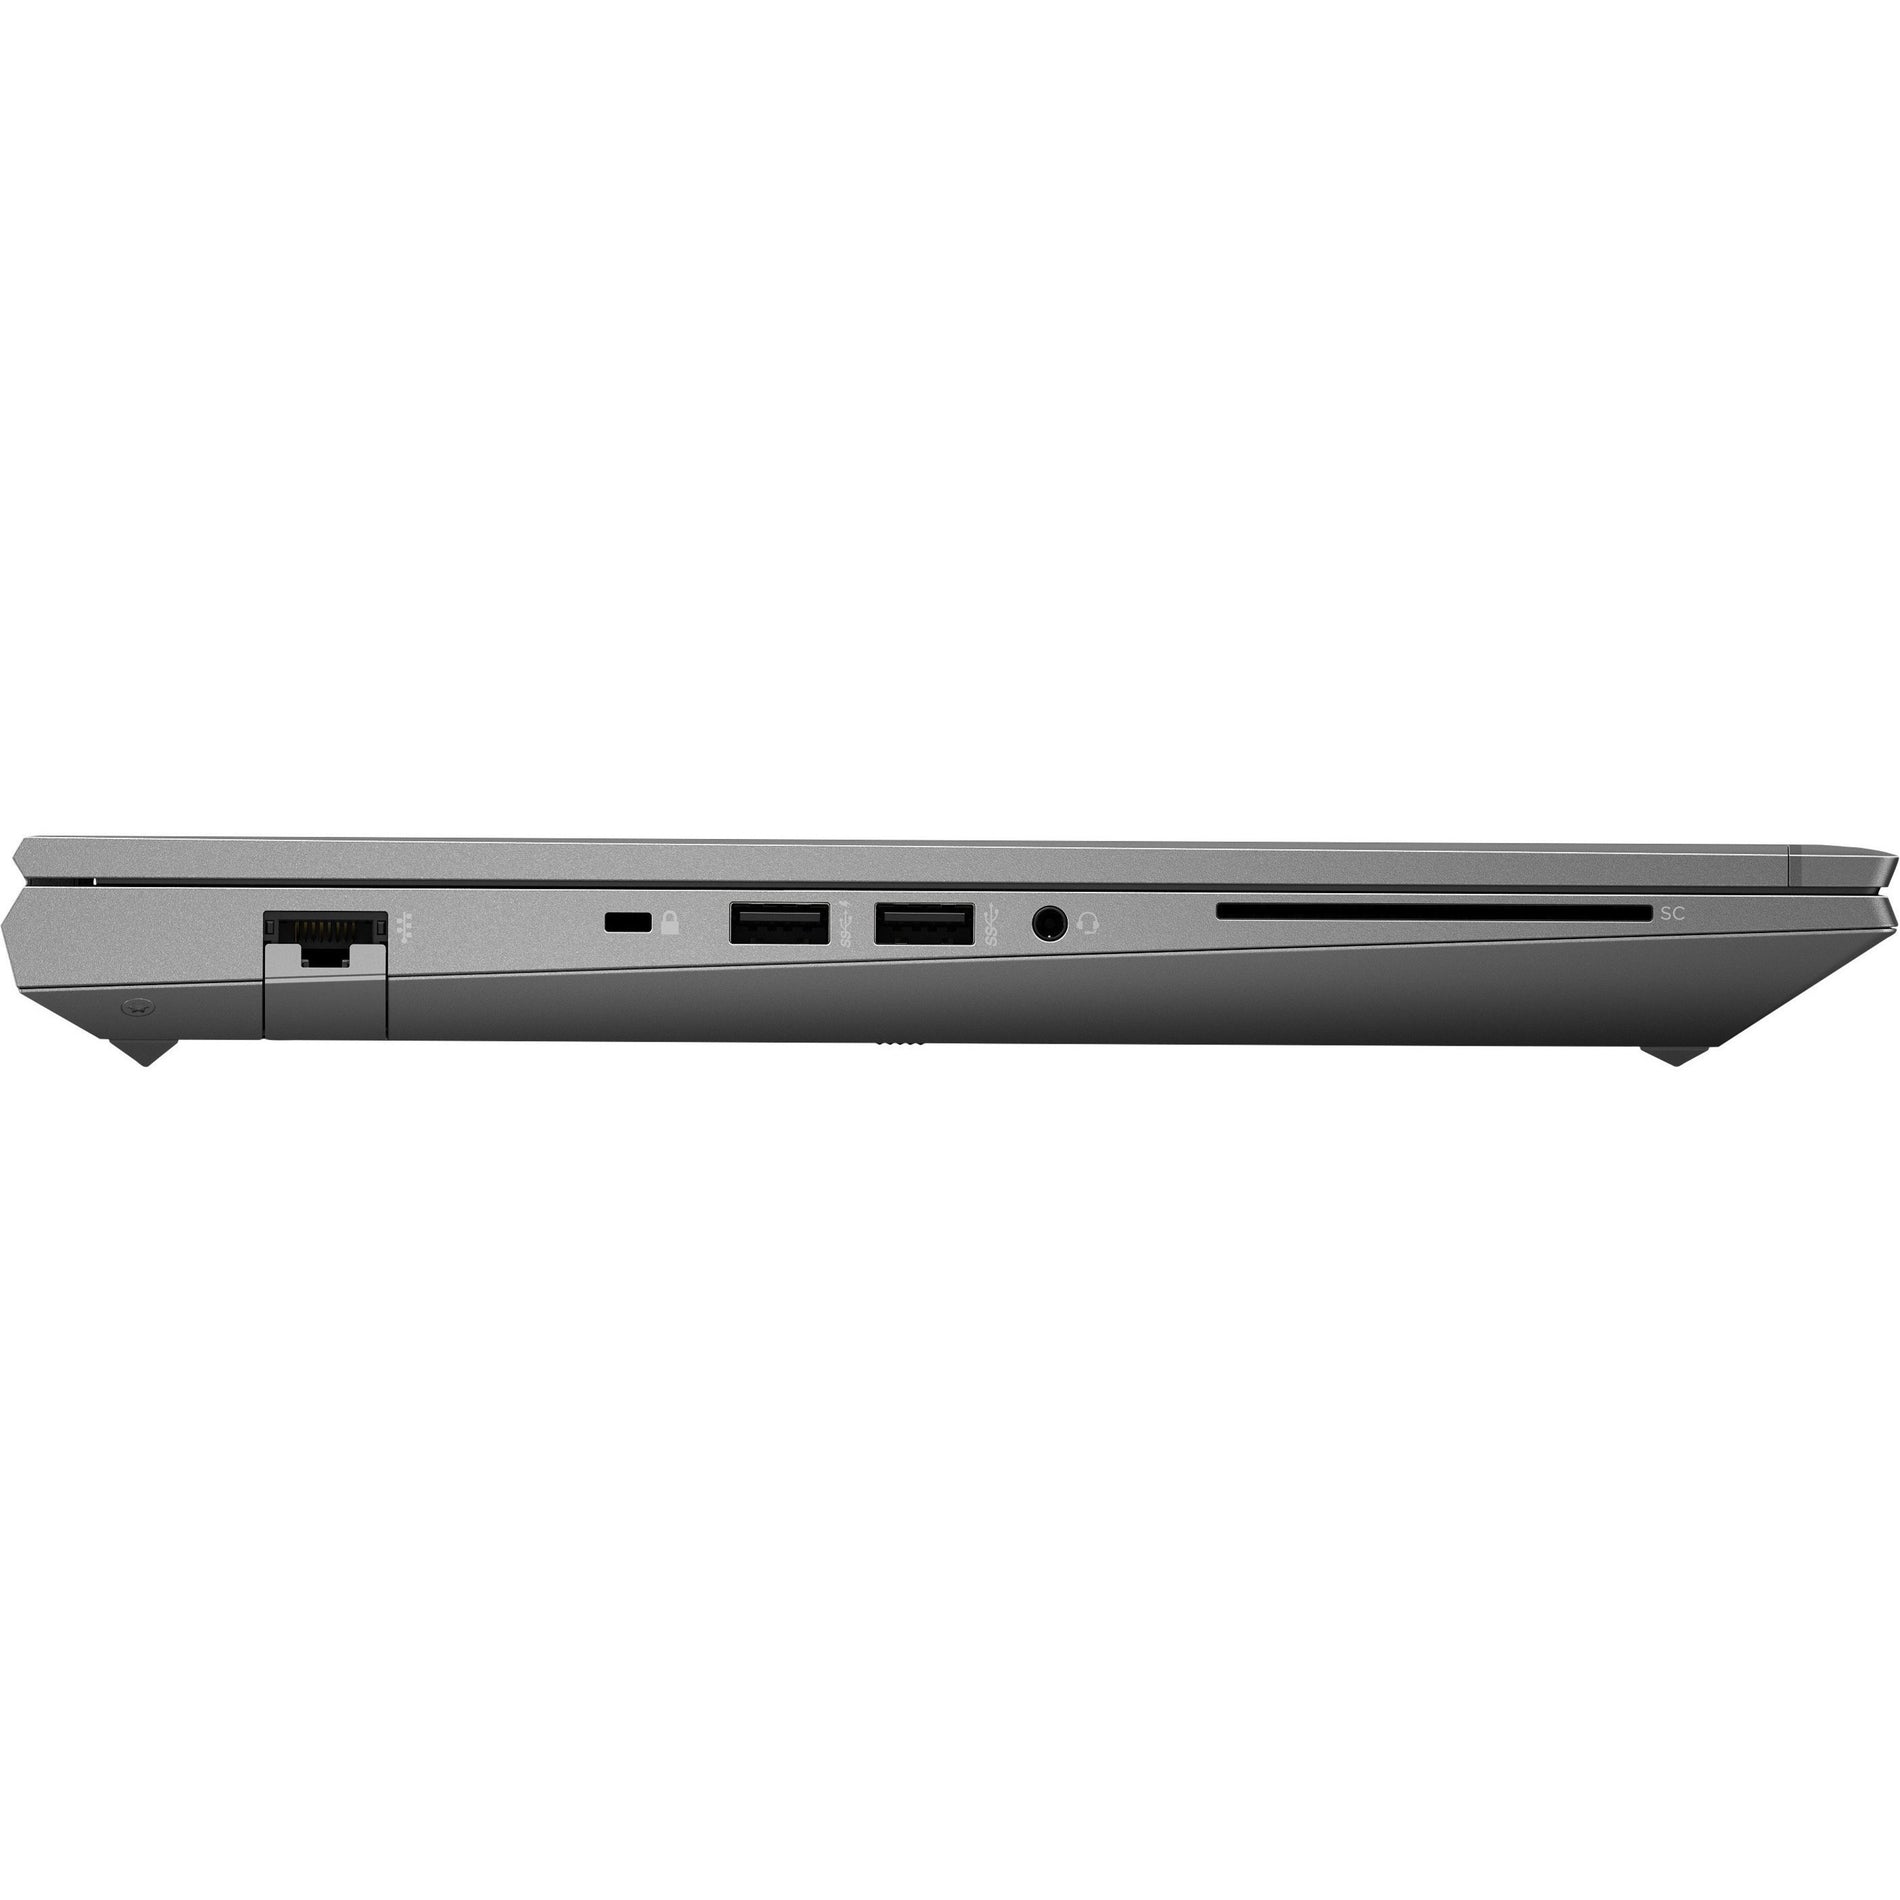 HP ZBook Fury 15.6 inch G8 Mobile Workstation PC, Intel i7-11800H, 32GB RAM, 512GB SSD, Windows 11 Pro64 DG106, 3yr Wrty